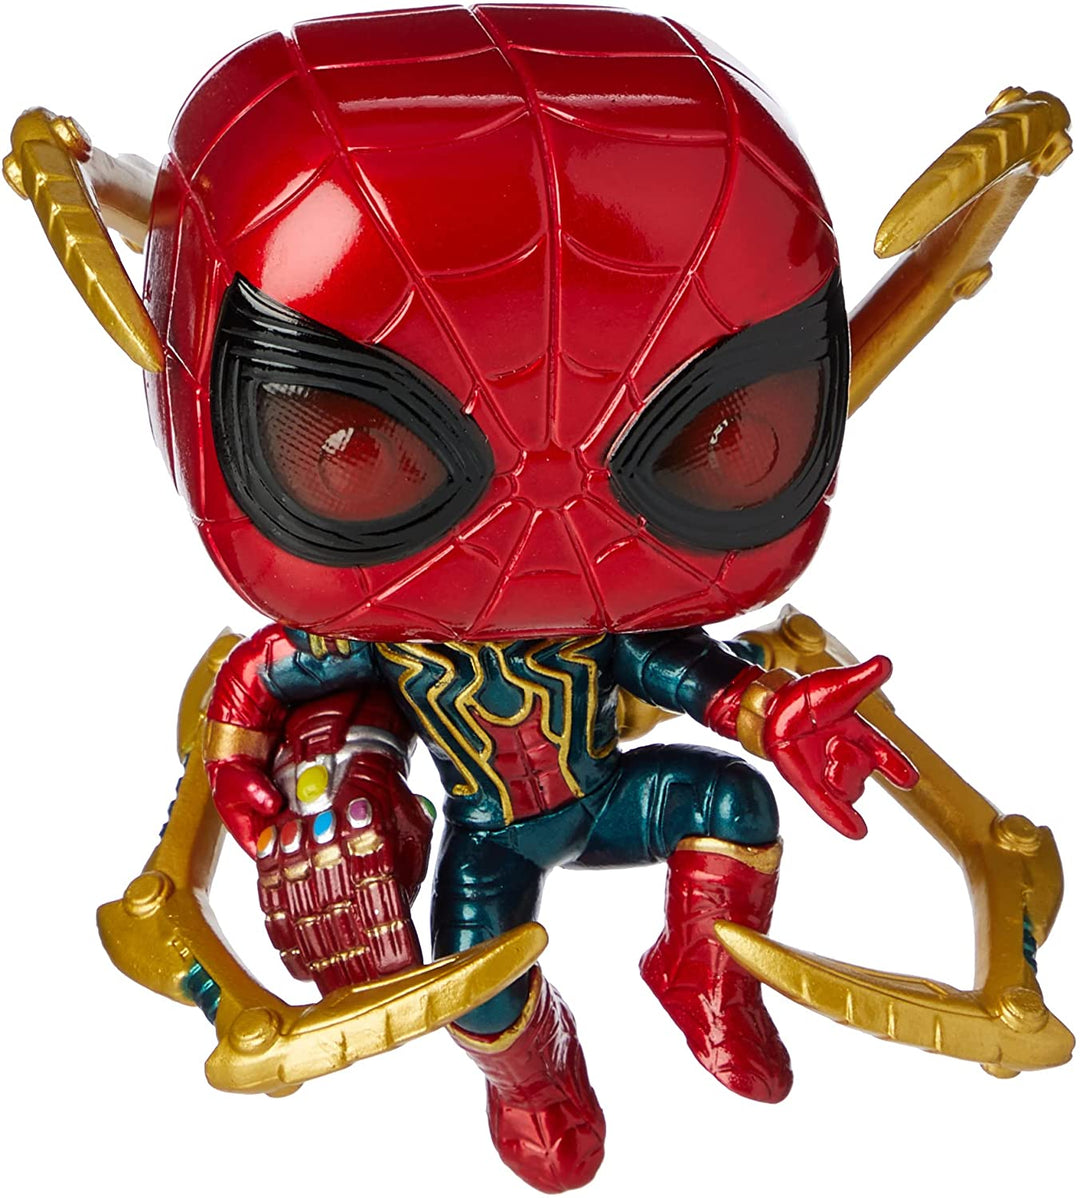 Marvel Avengers Endgame Iron Spider with Nano Gauntlet Funko Pop! Vinyl